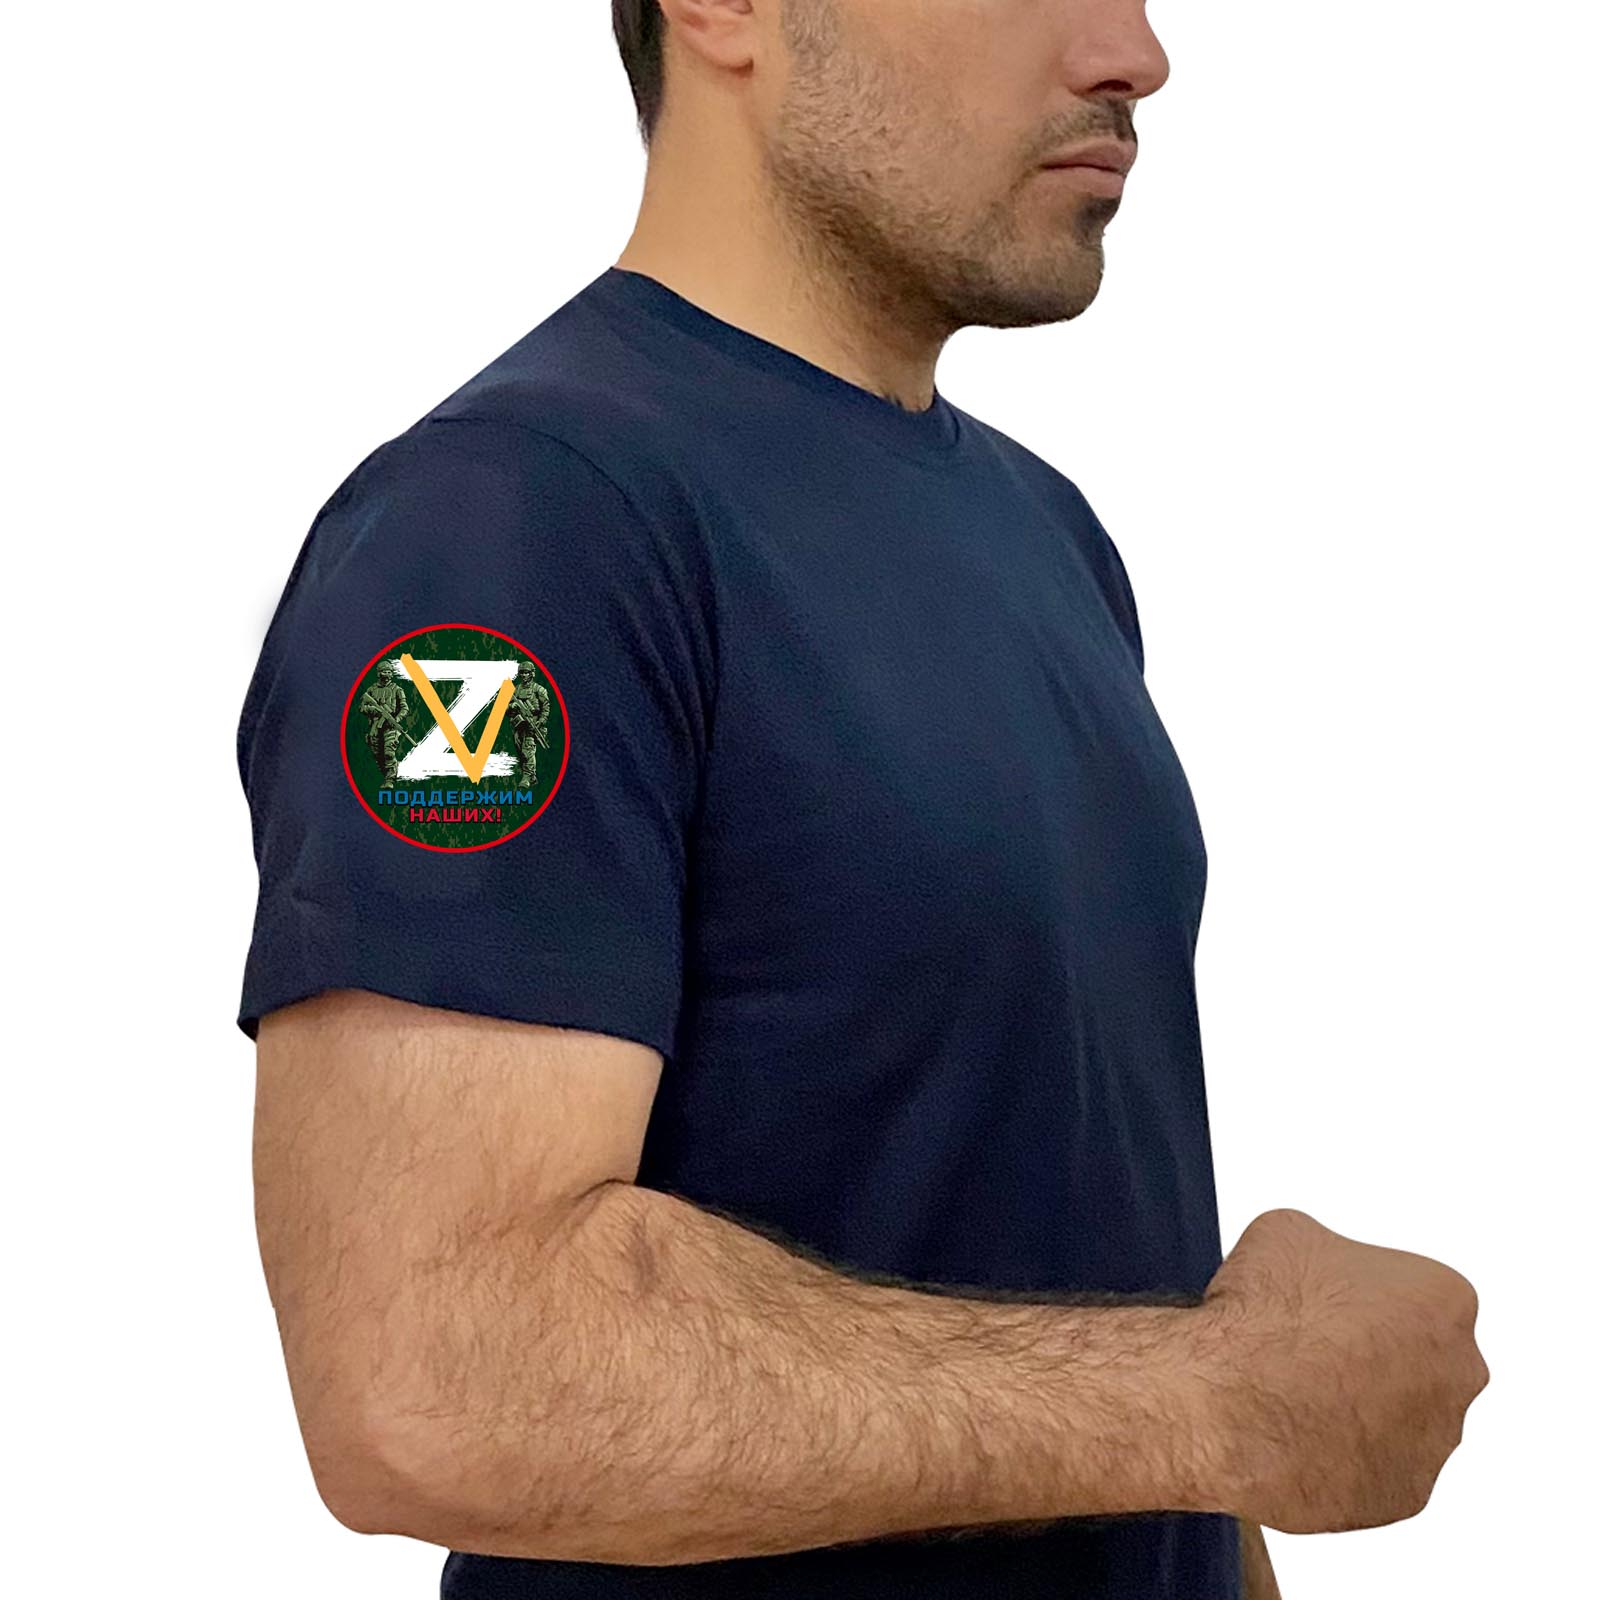 Тёмно-синяя футболка с трансфером ZV на рукаве